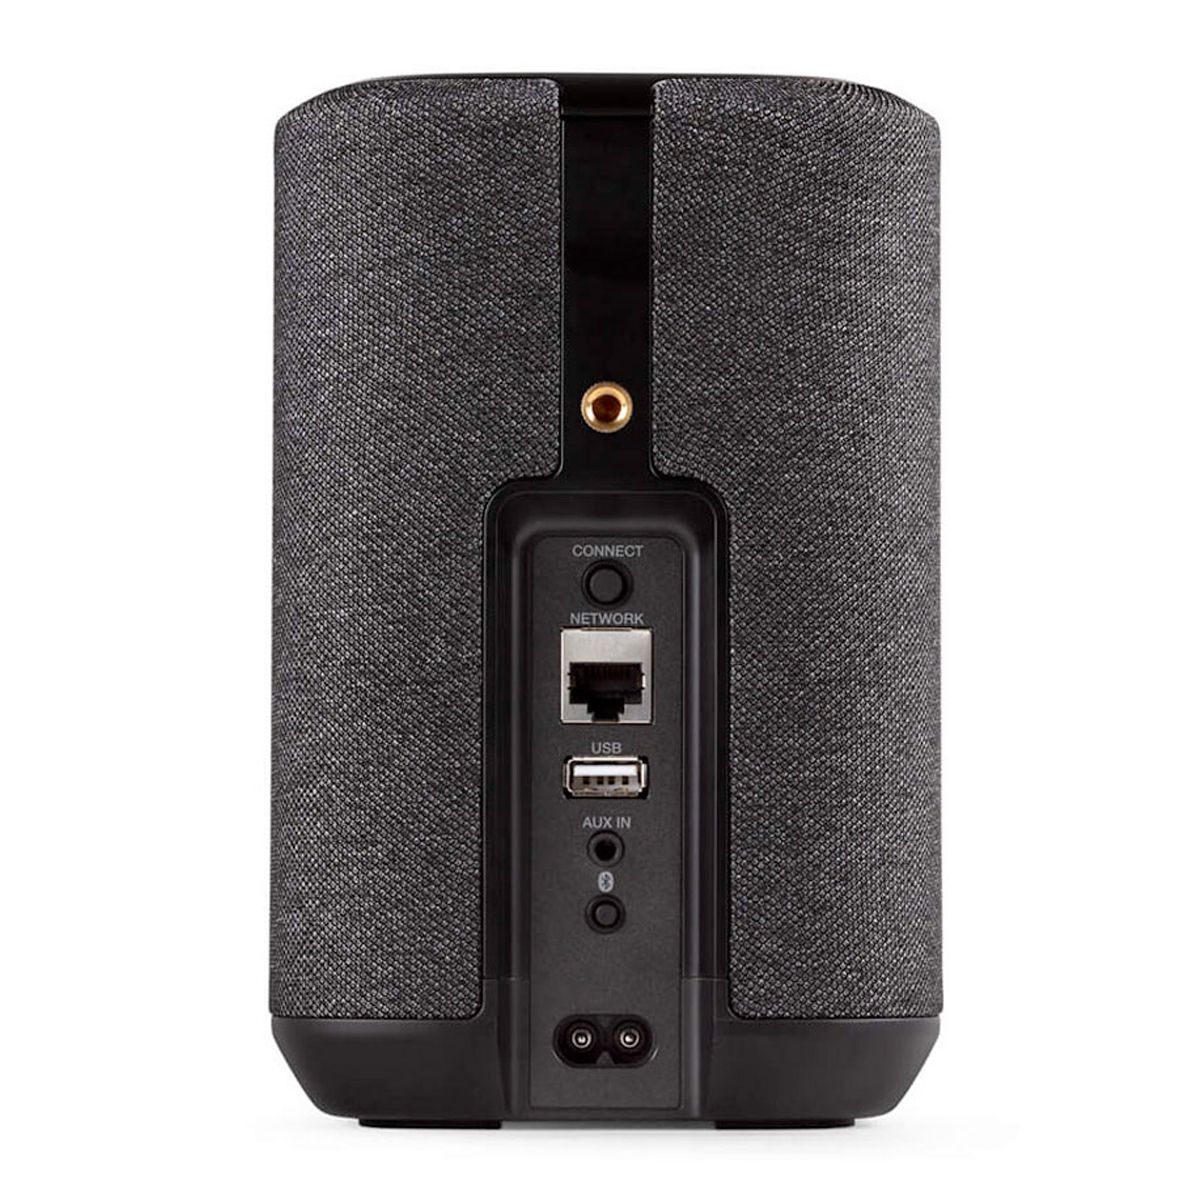 Denon Home 150 Wireless Speaker - black